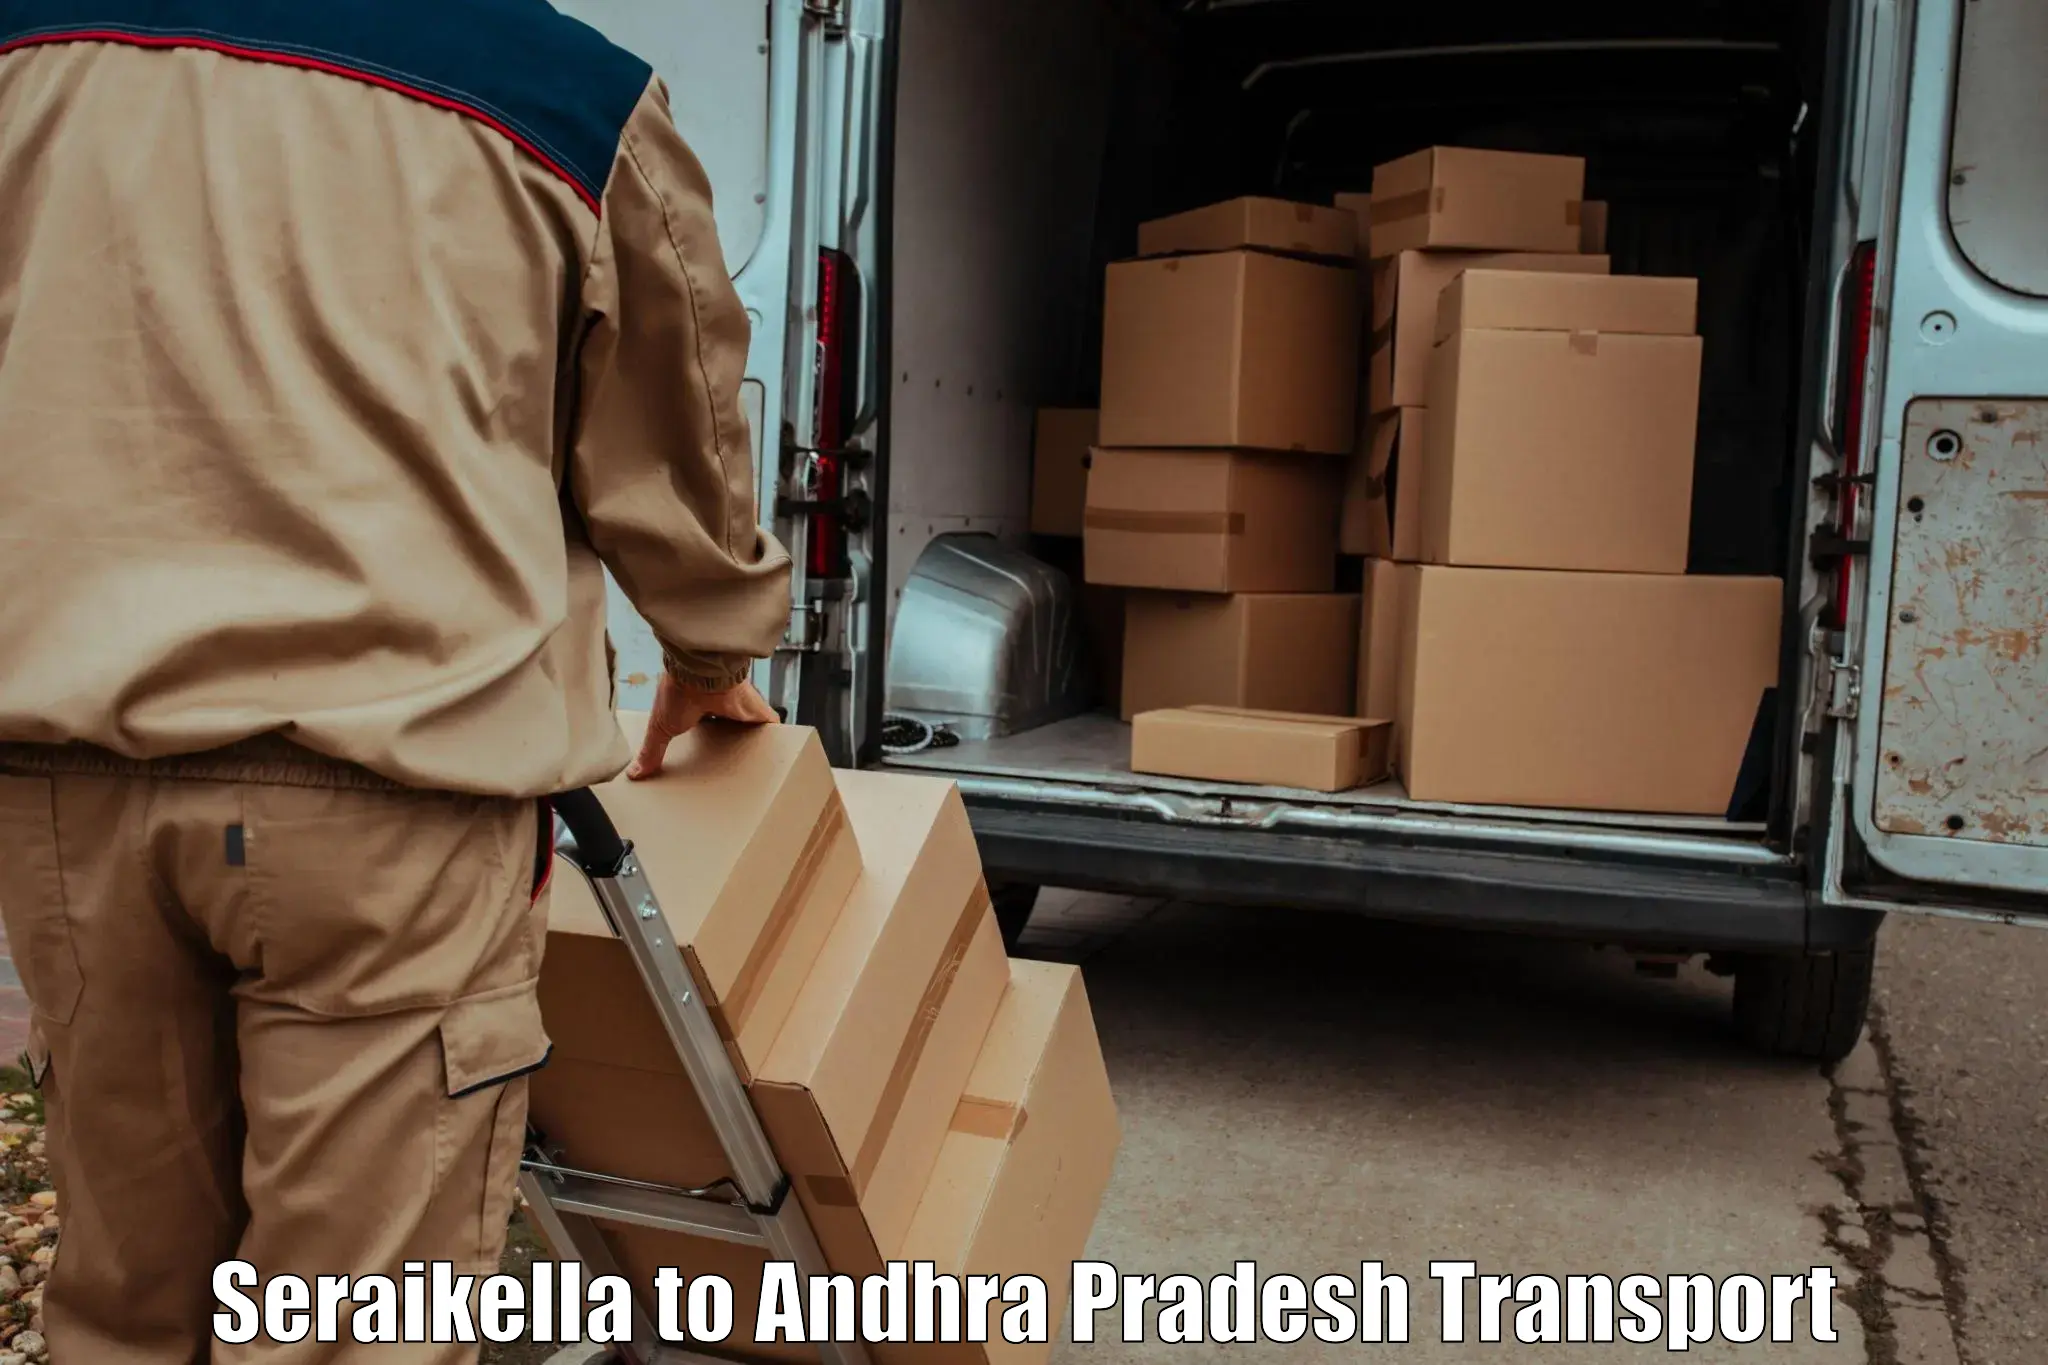 Transport in sharing Seraikella to Rajahmundry